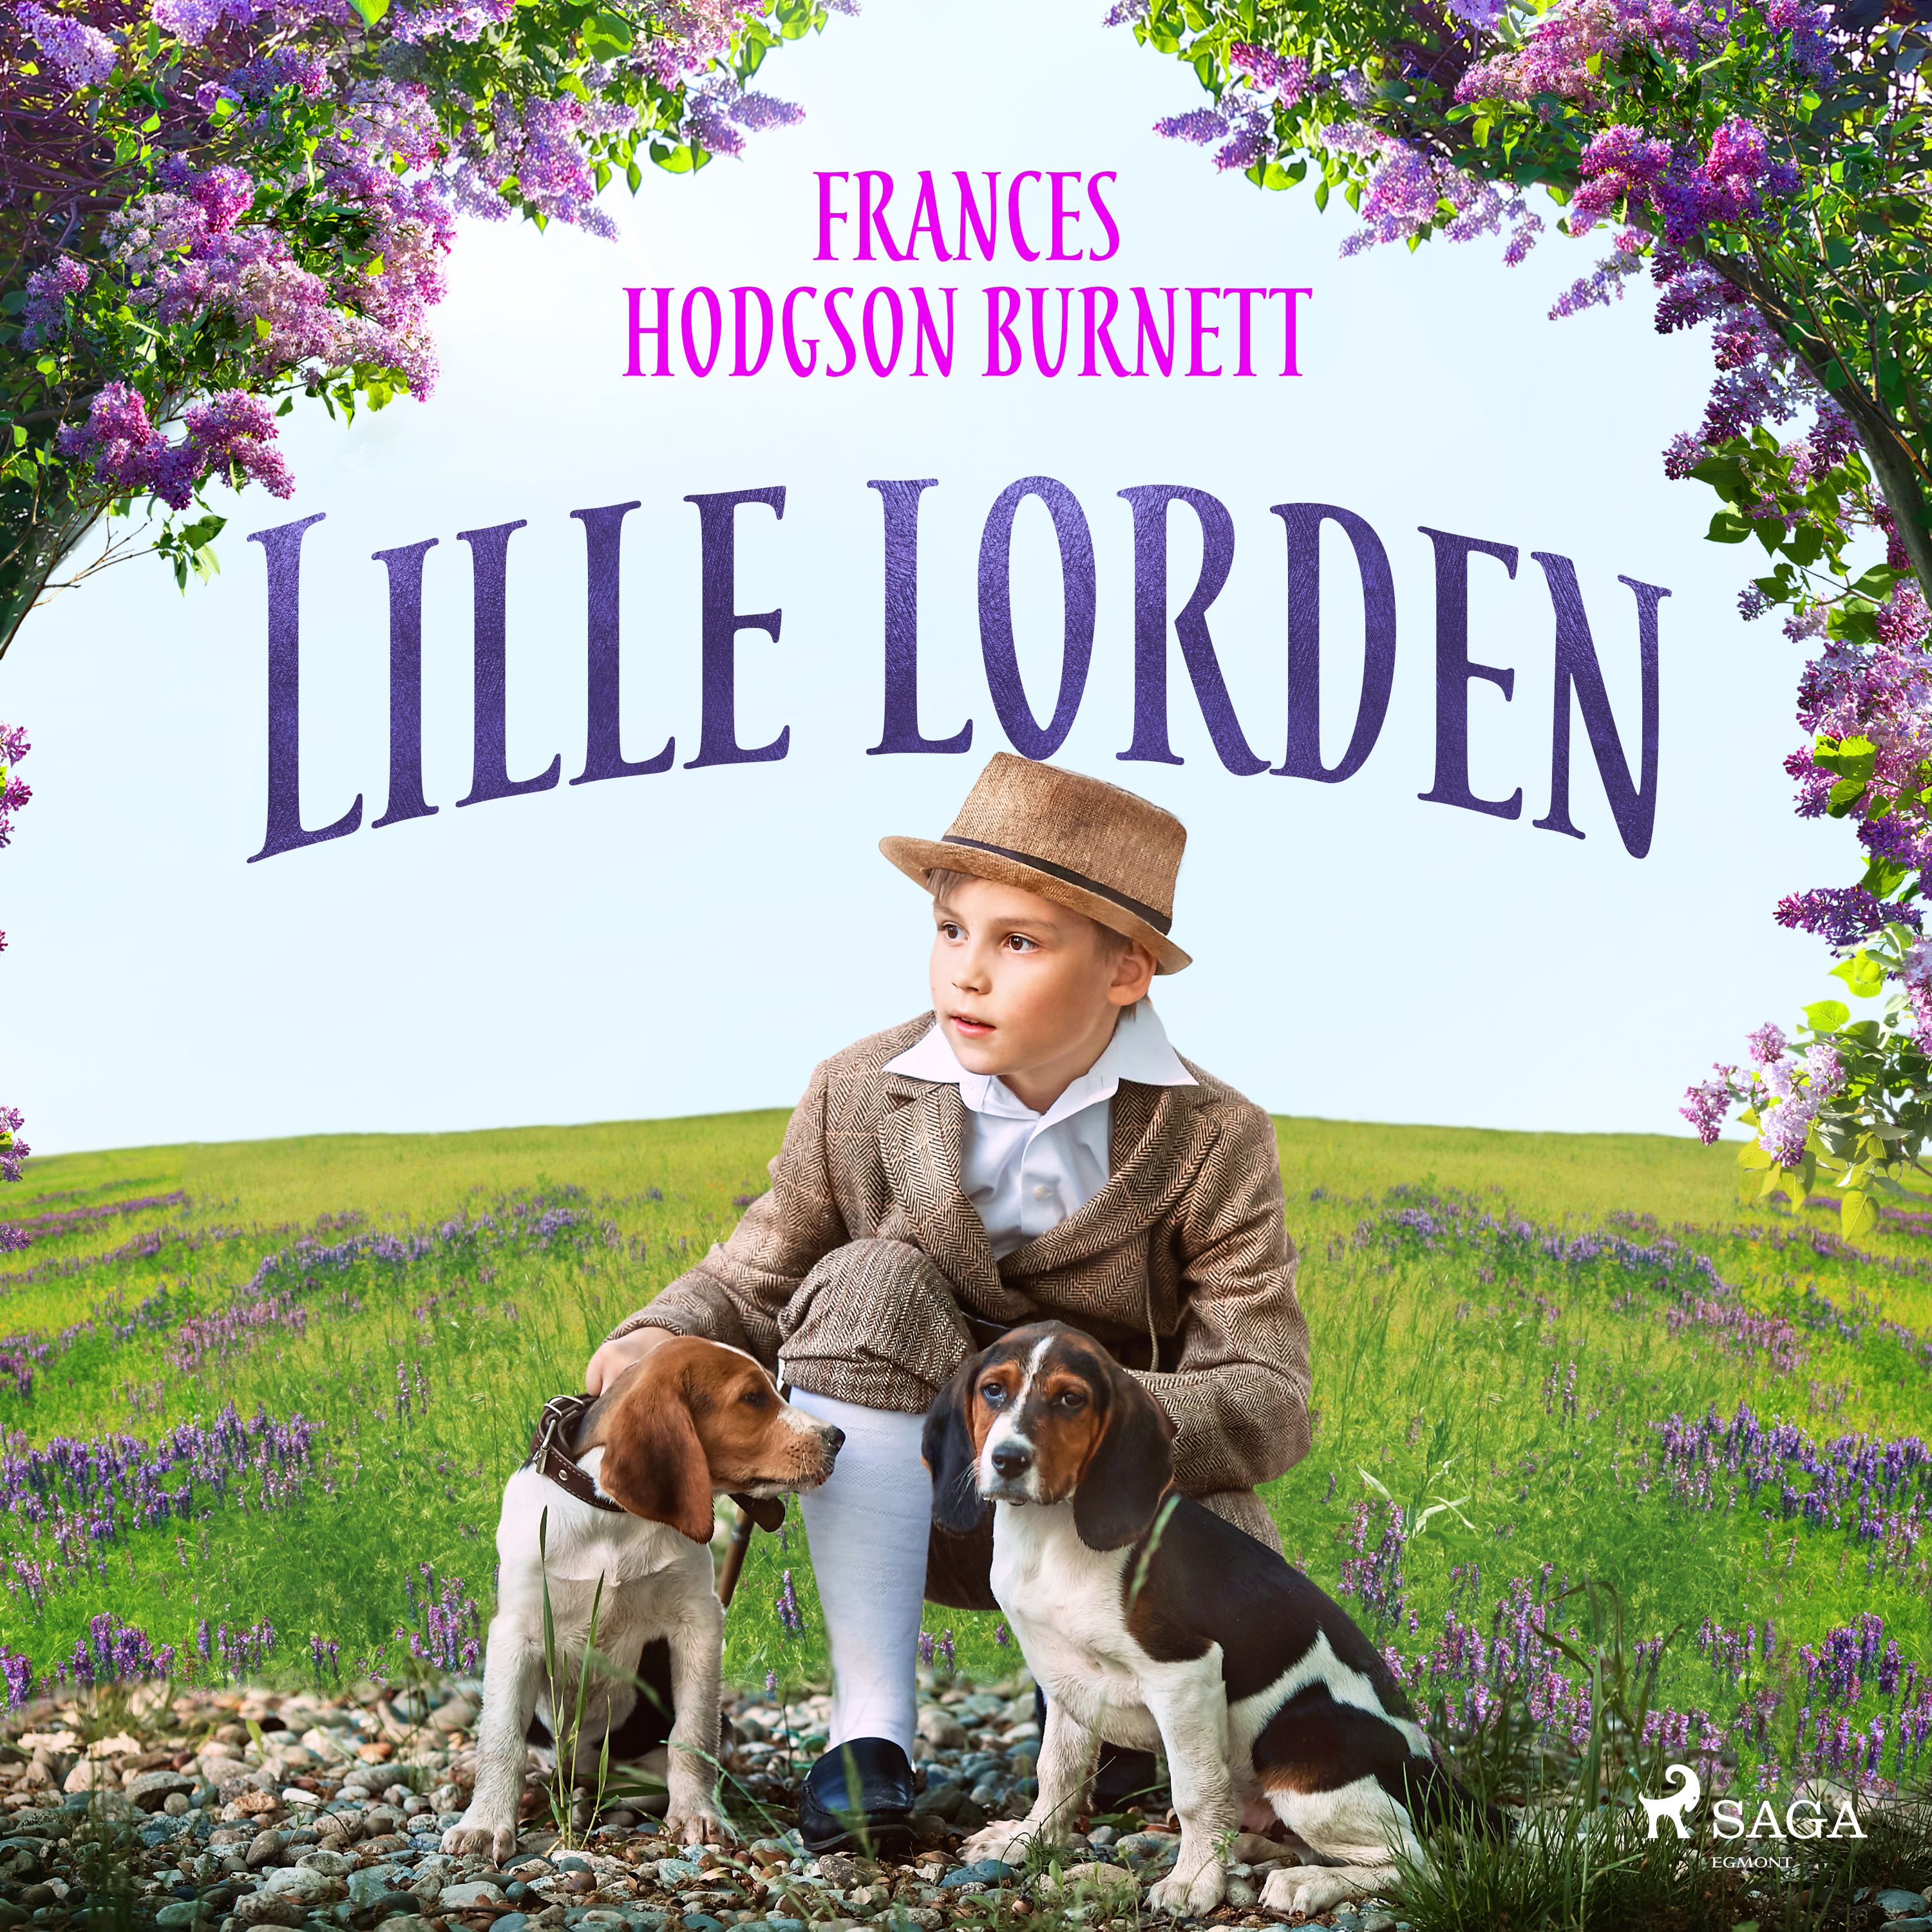 Lille lorden, ljudbok av Frances Hodgson Burnett